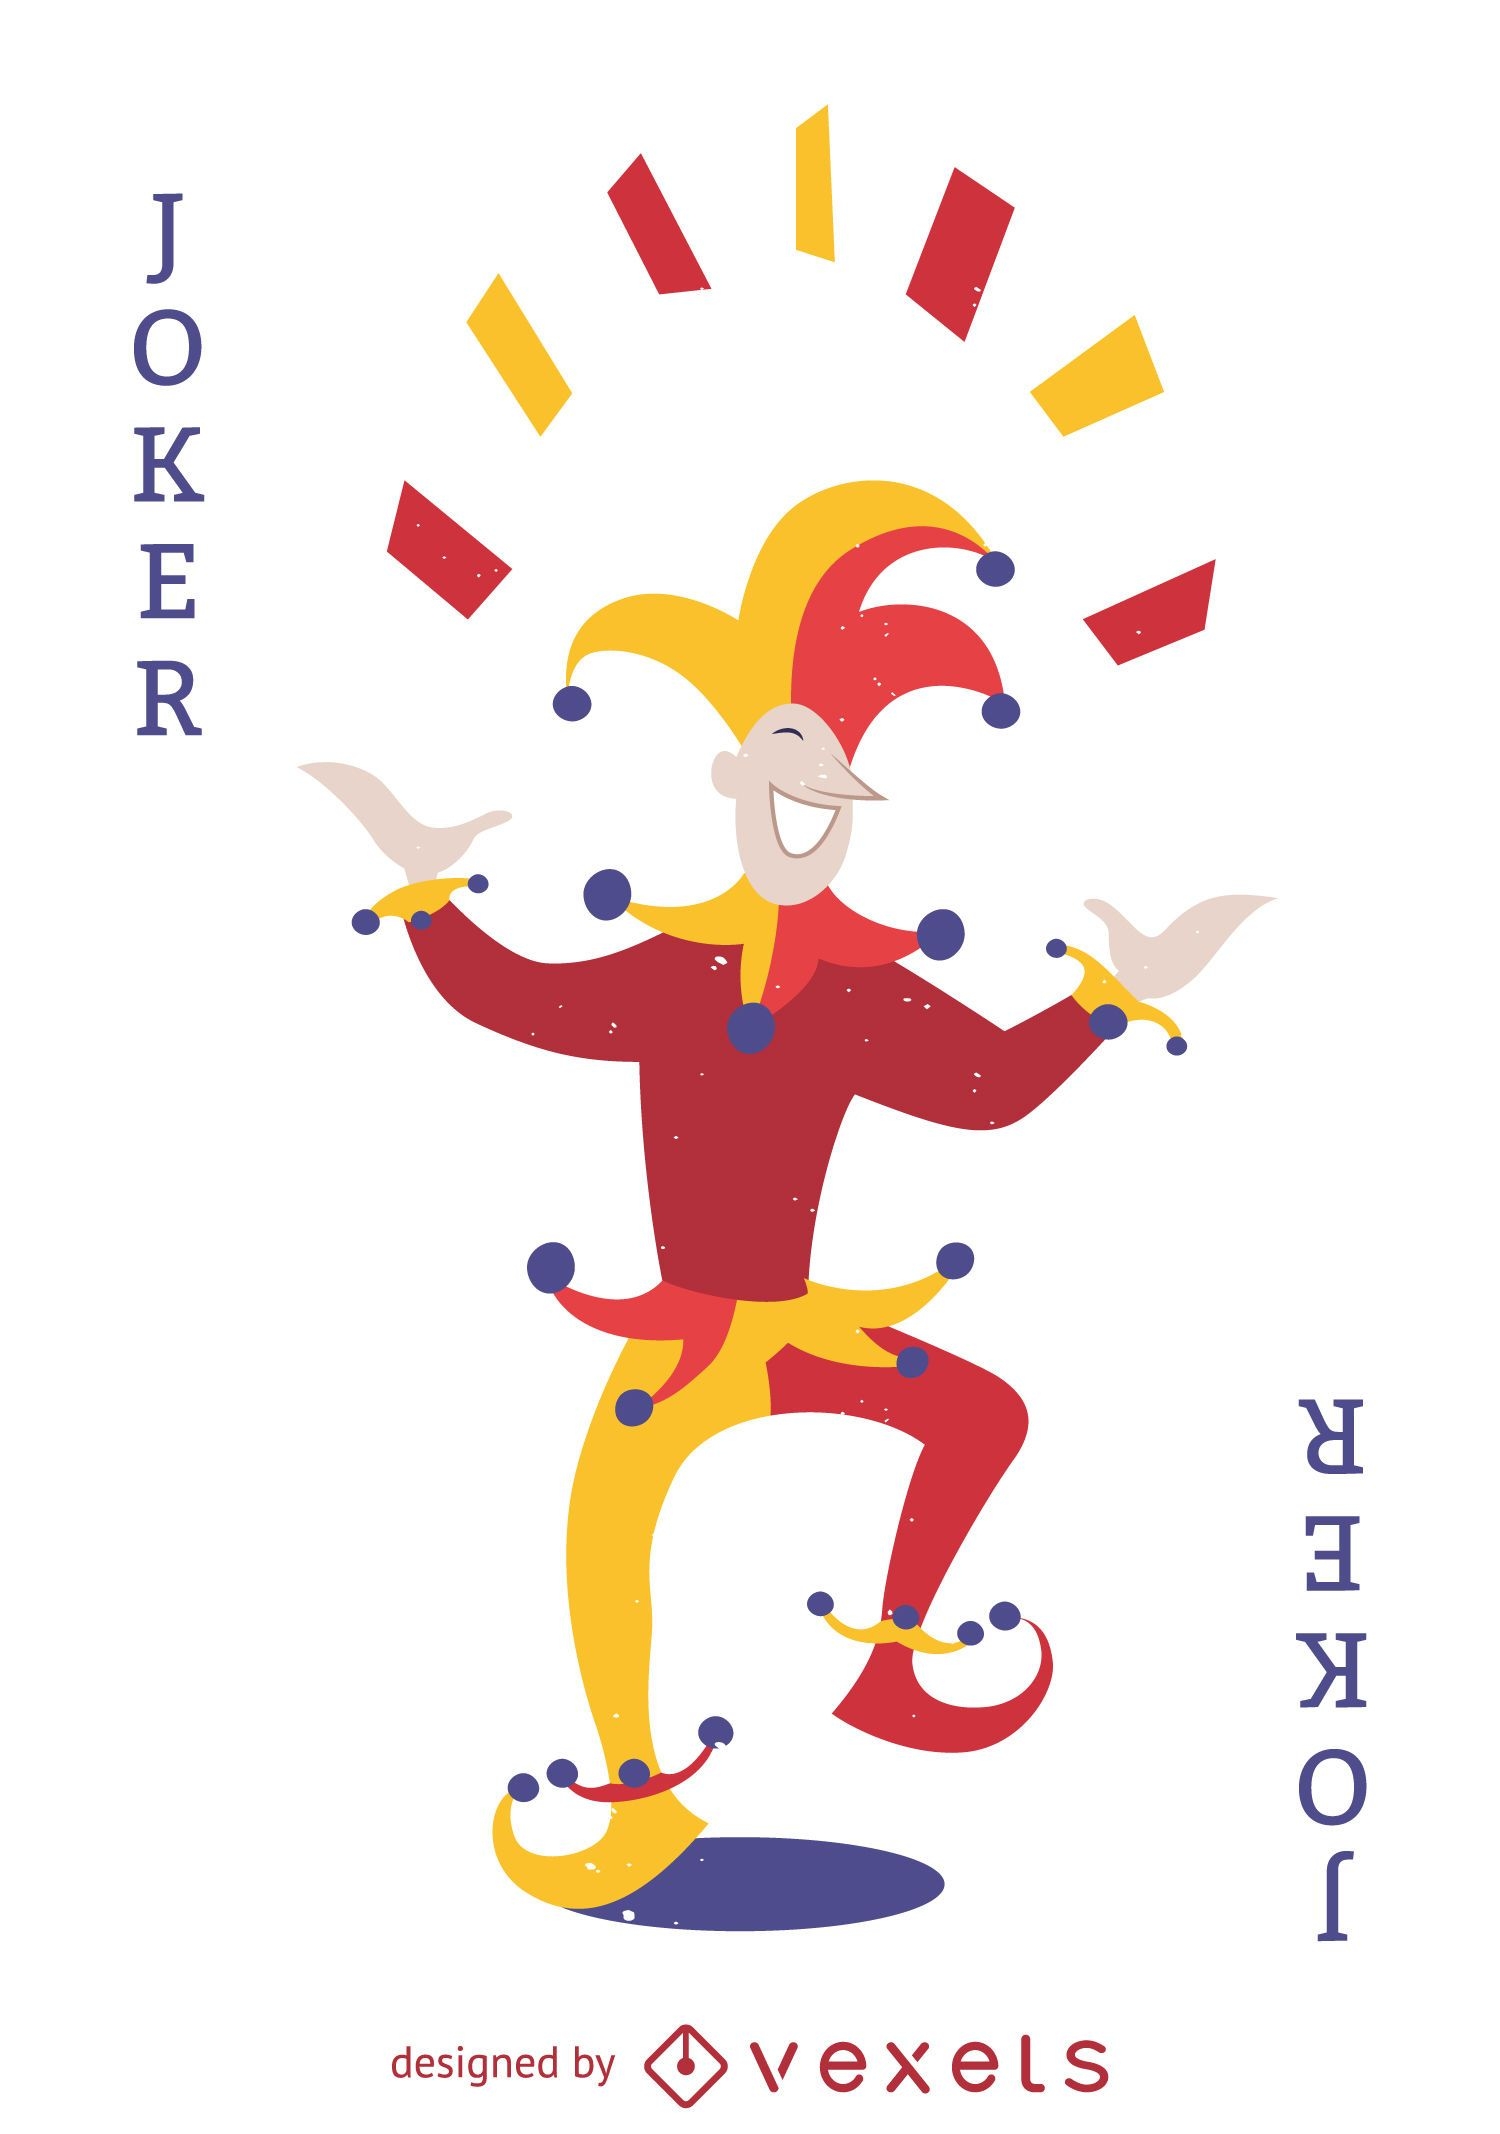 Joker card illustration